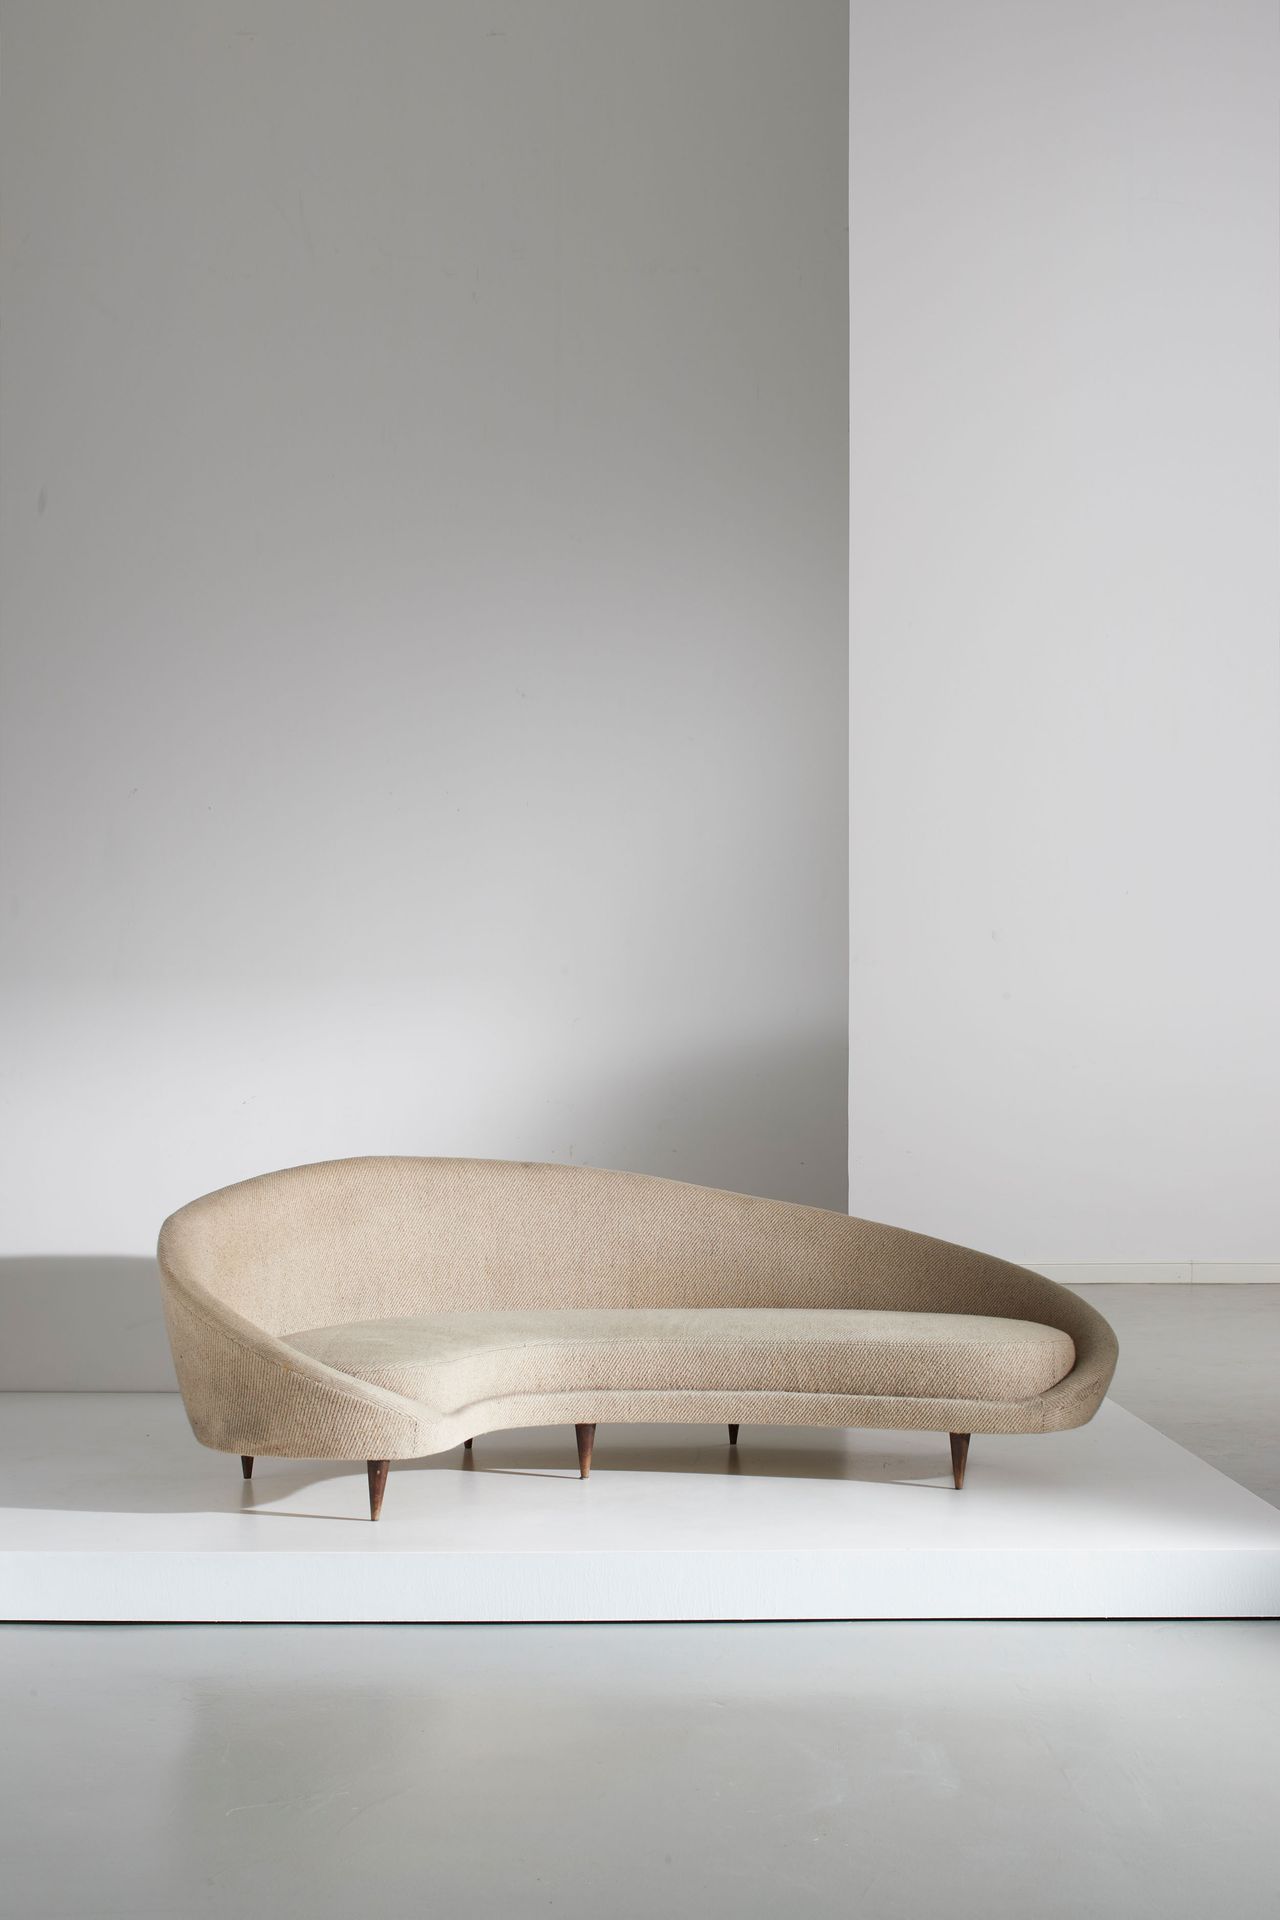 FEDERICO MUNARI 弧形沙发。转动的木头，软垫织物。意大利1950年代。
cm 79x240x140
A CURVED SETTEE BY F. M&hellip;